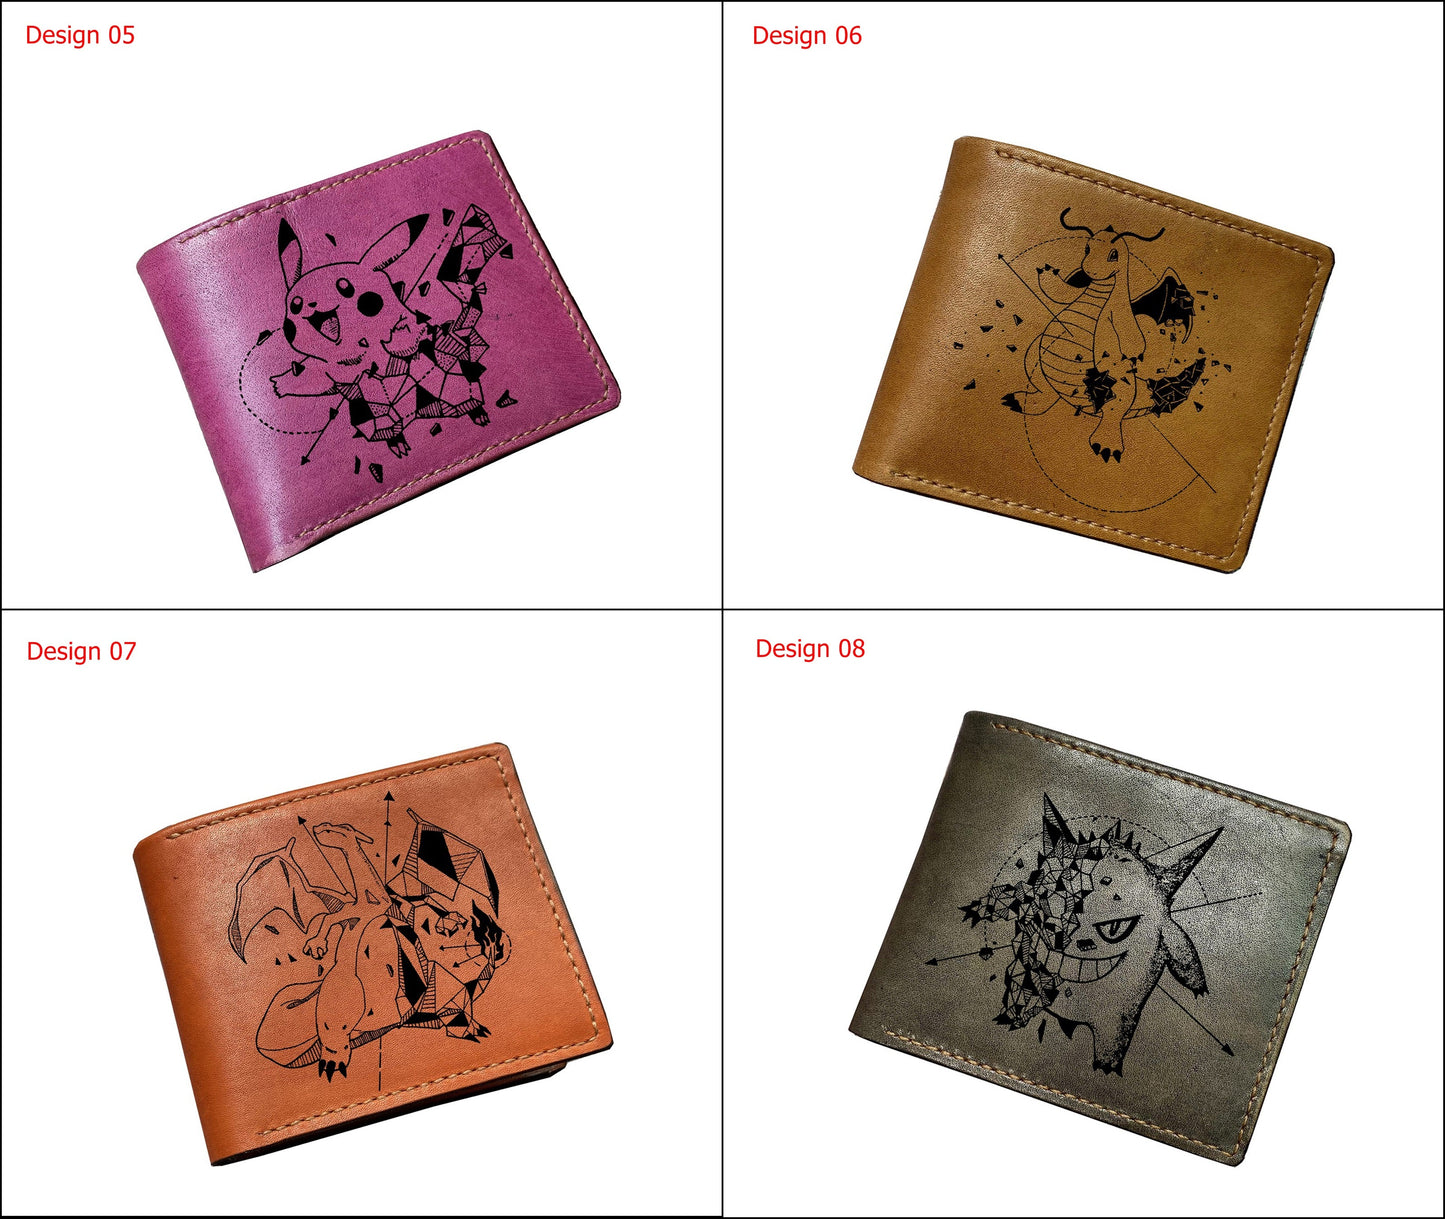 Mayan Corner - Pokemon geometric art leather handmade wallet, leather gift for dad, husband, brother - Blastoise/Kamex water pokemon